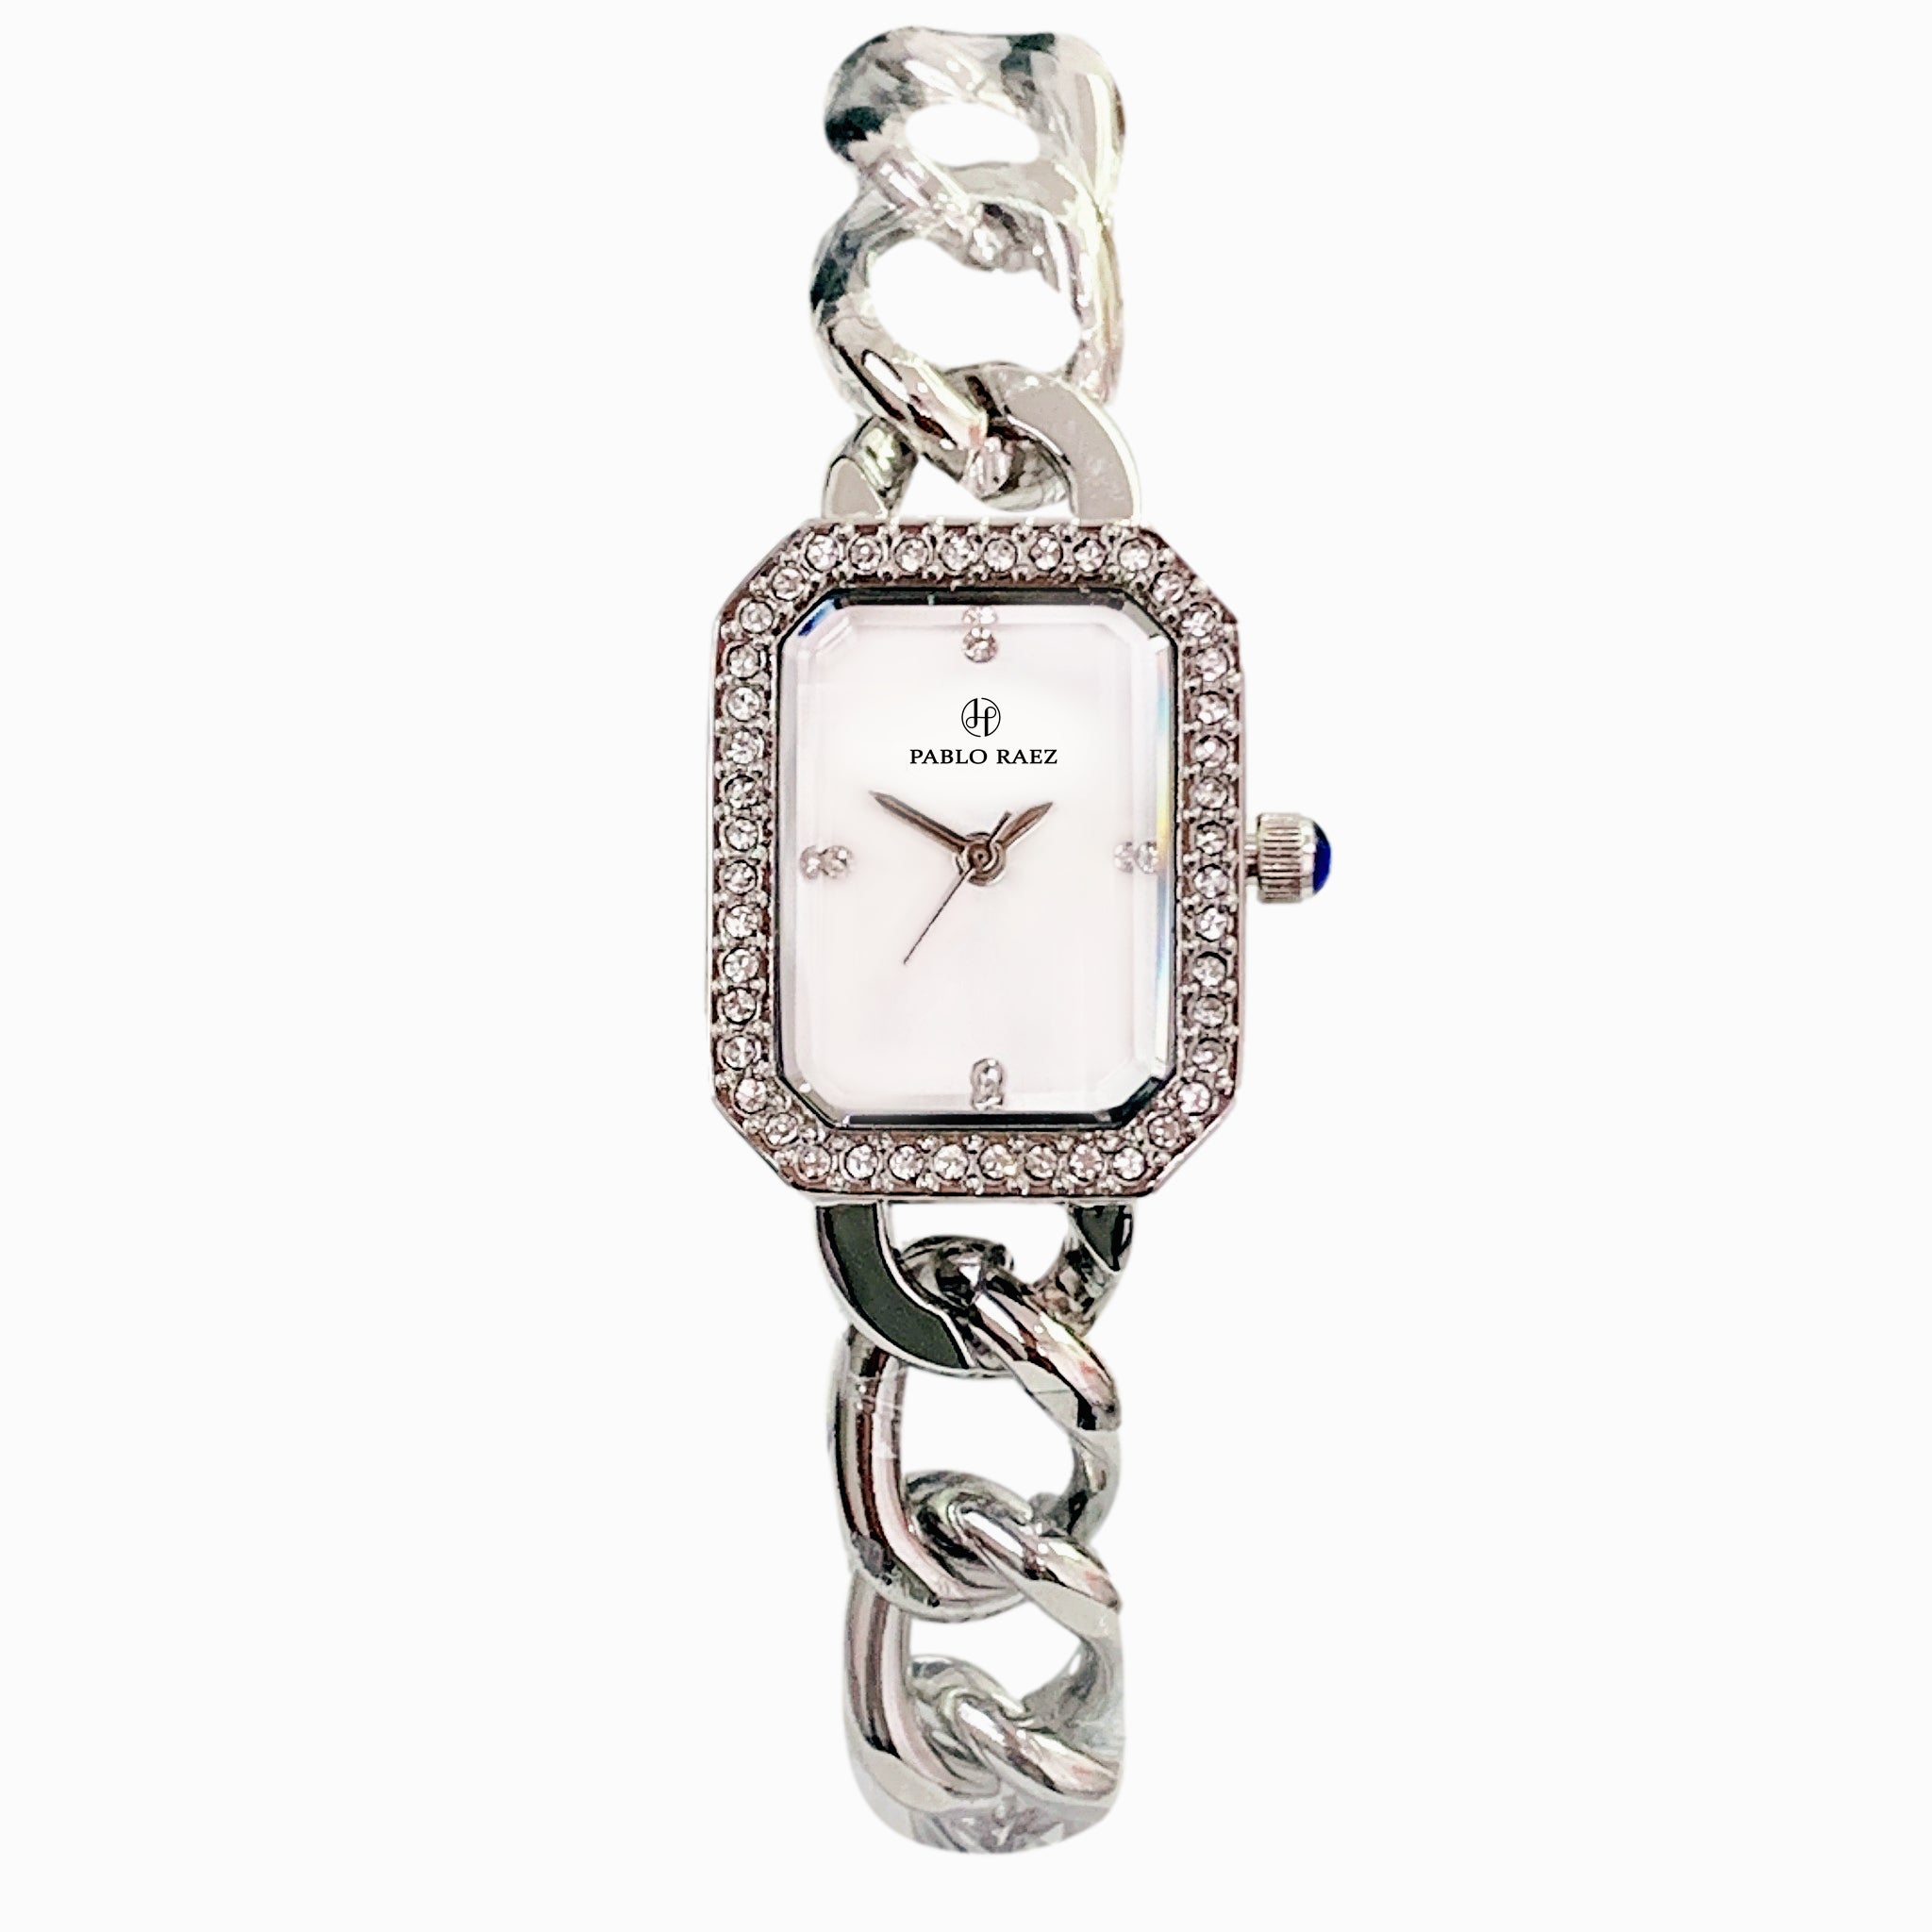 Pablo Raez Hot Sale Fashion Luxury Watch 100% Steel Women Clock Женские Часы Wristwatch Quartz High Quality Relogio Feminino Gif